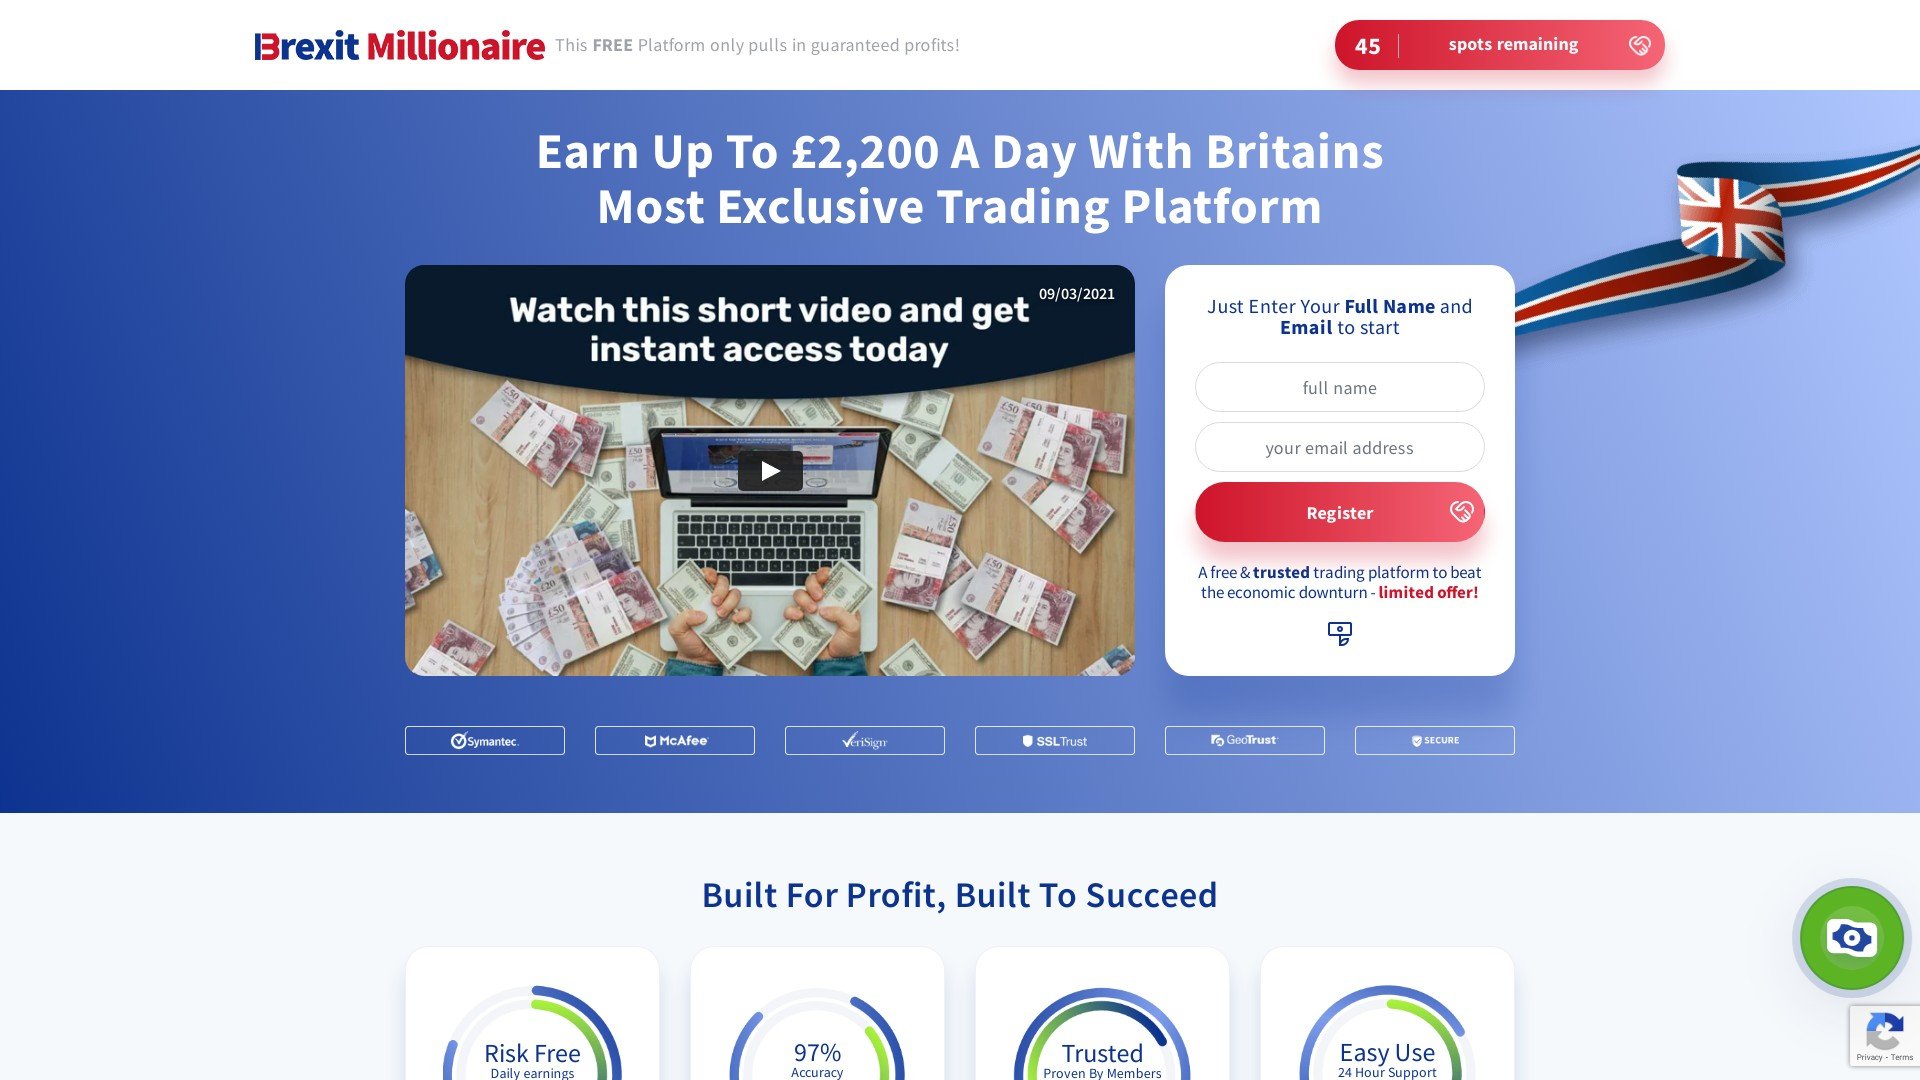 Brexit Millionaire app located at brexitmllionaire.site